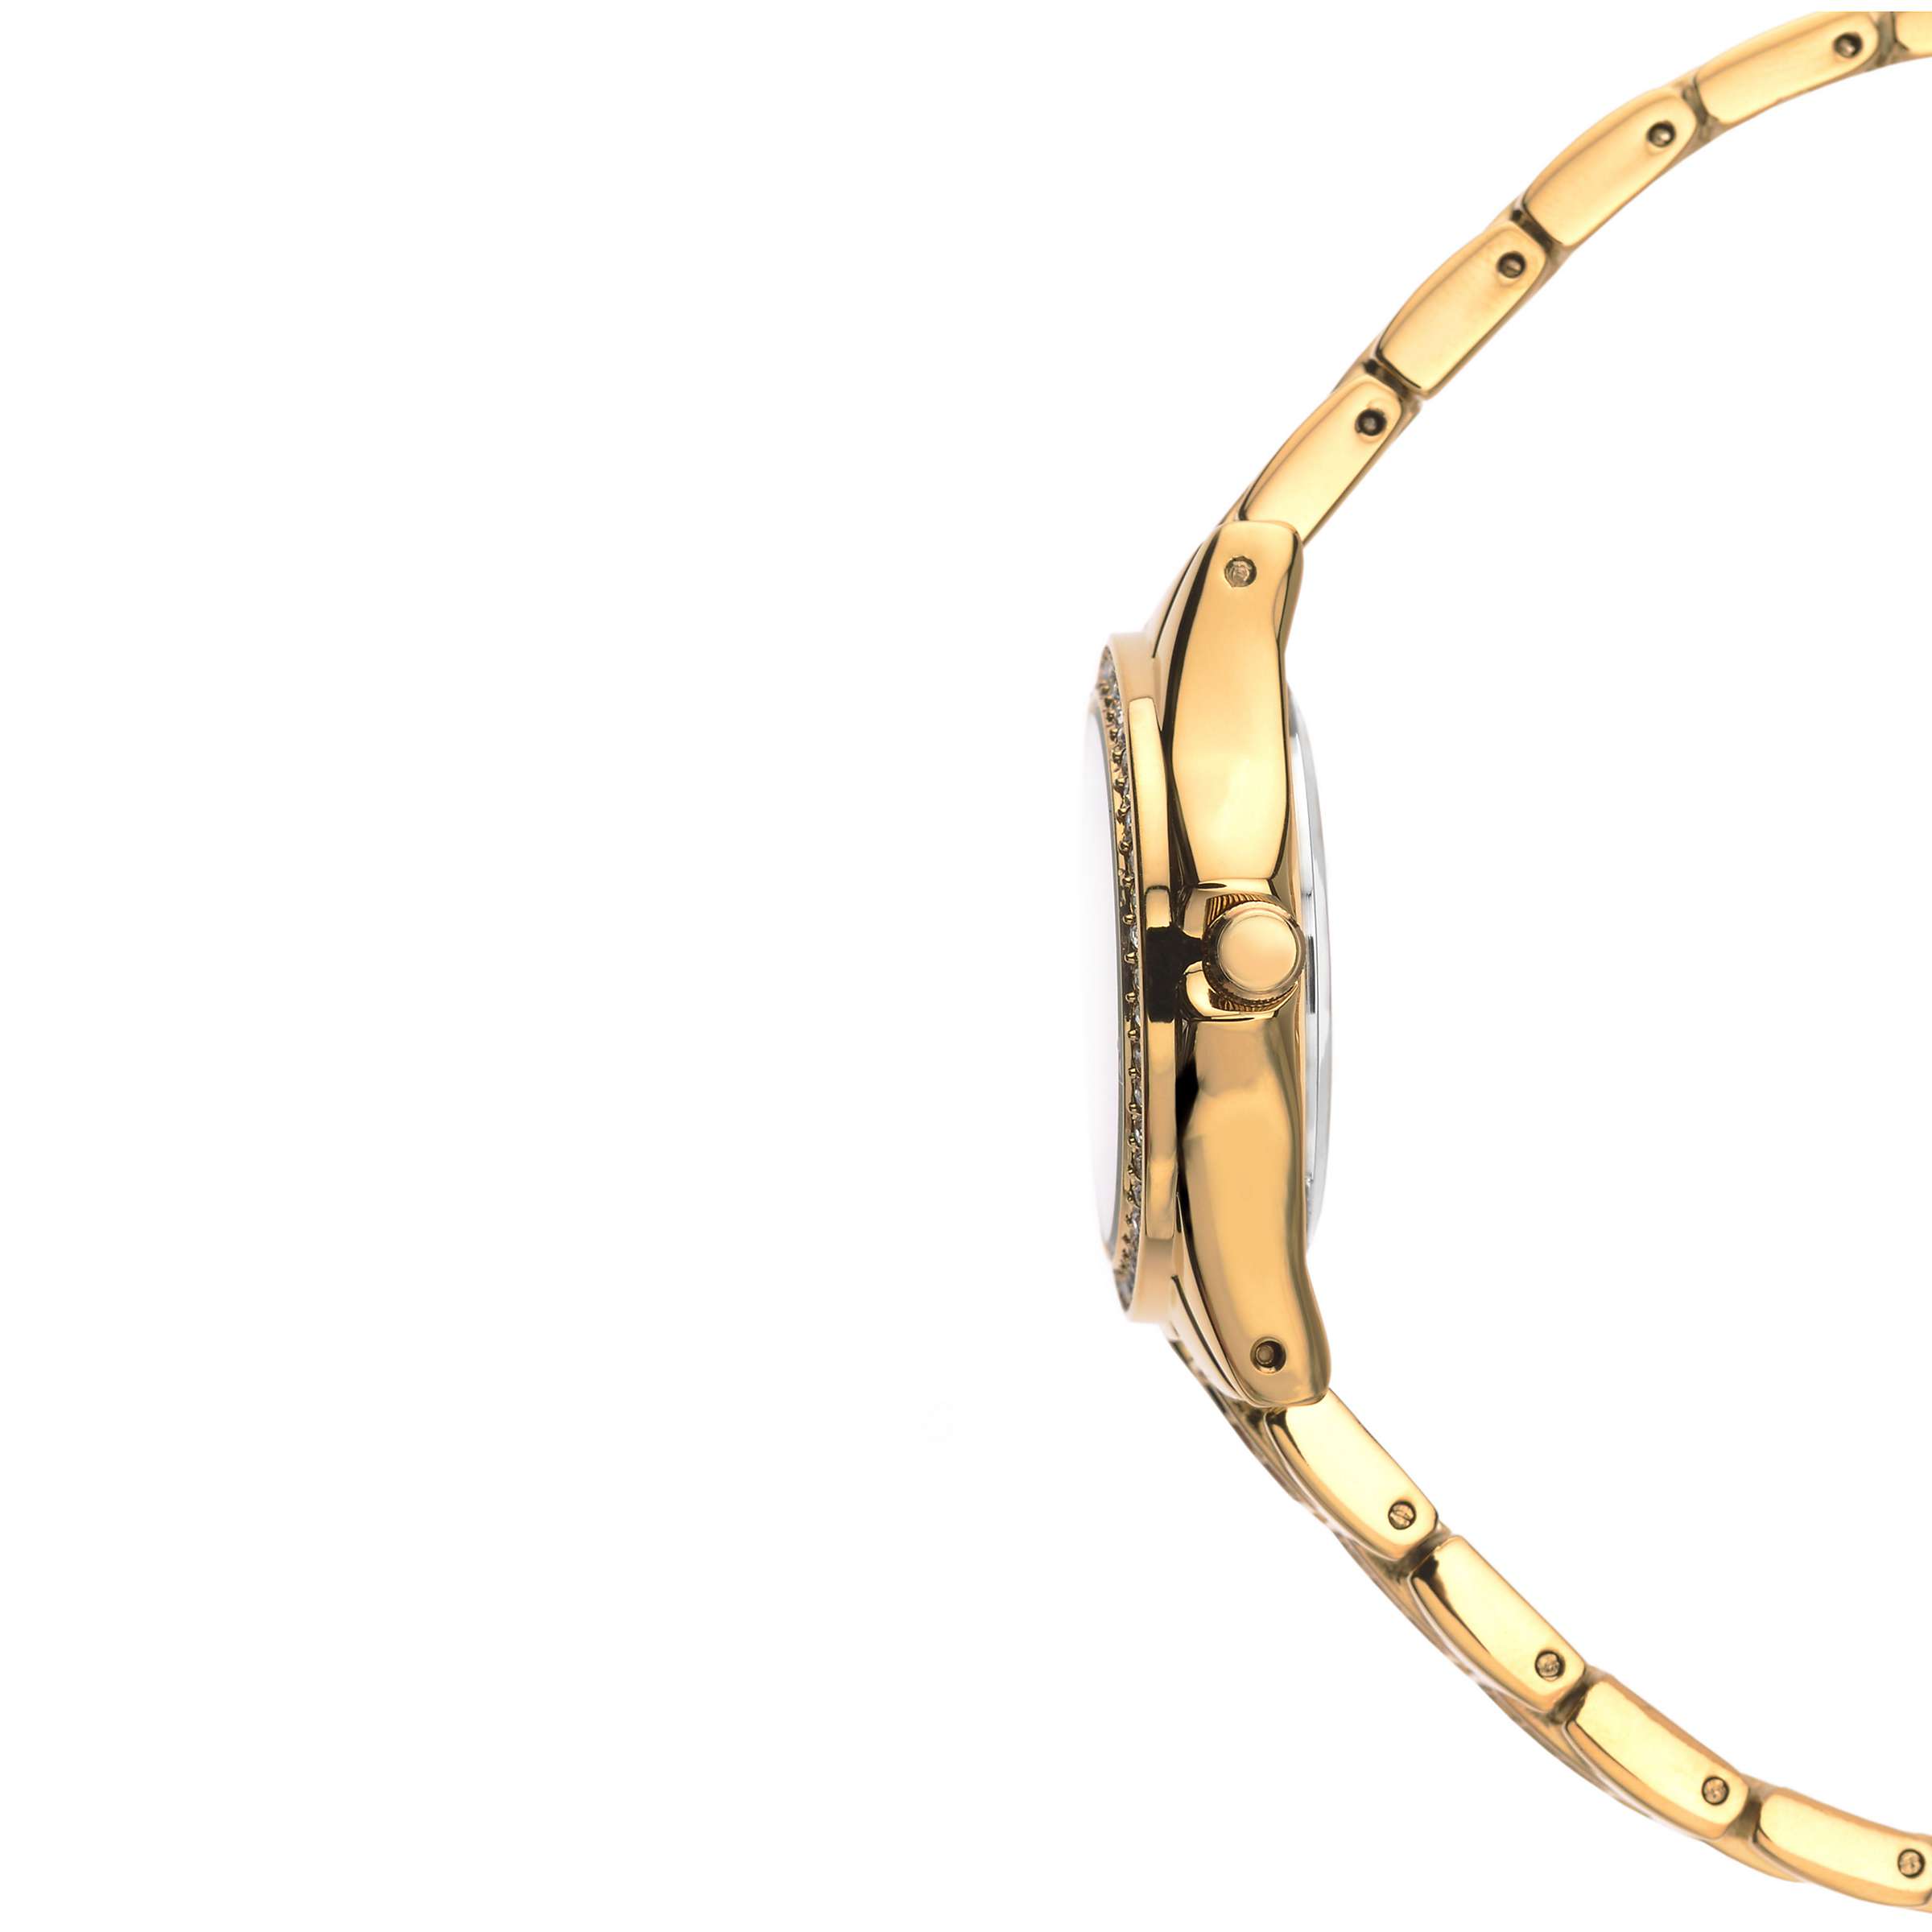 Buy Sekonda 2020.27 Women's Diamante Bracelet Strap Watch, Gold Online at johnlewis.com